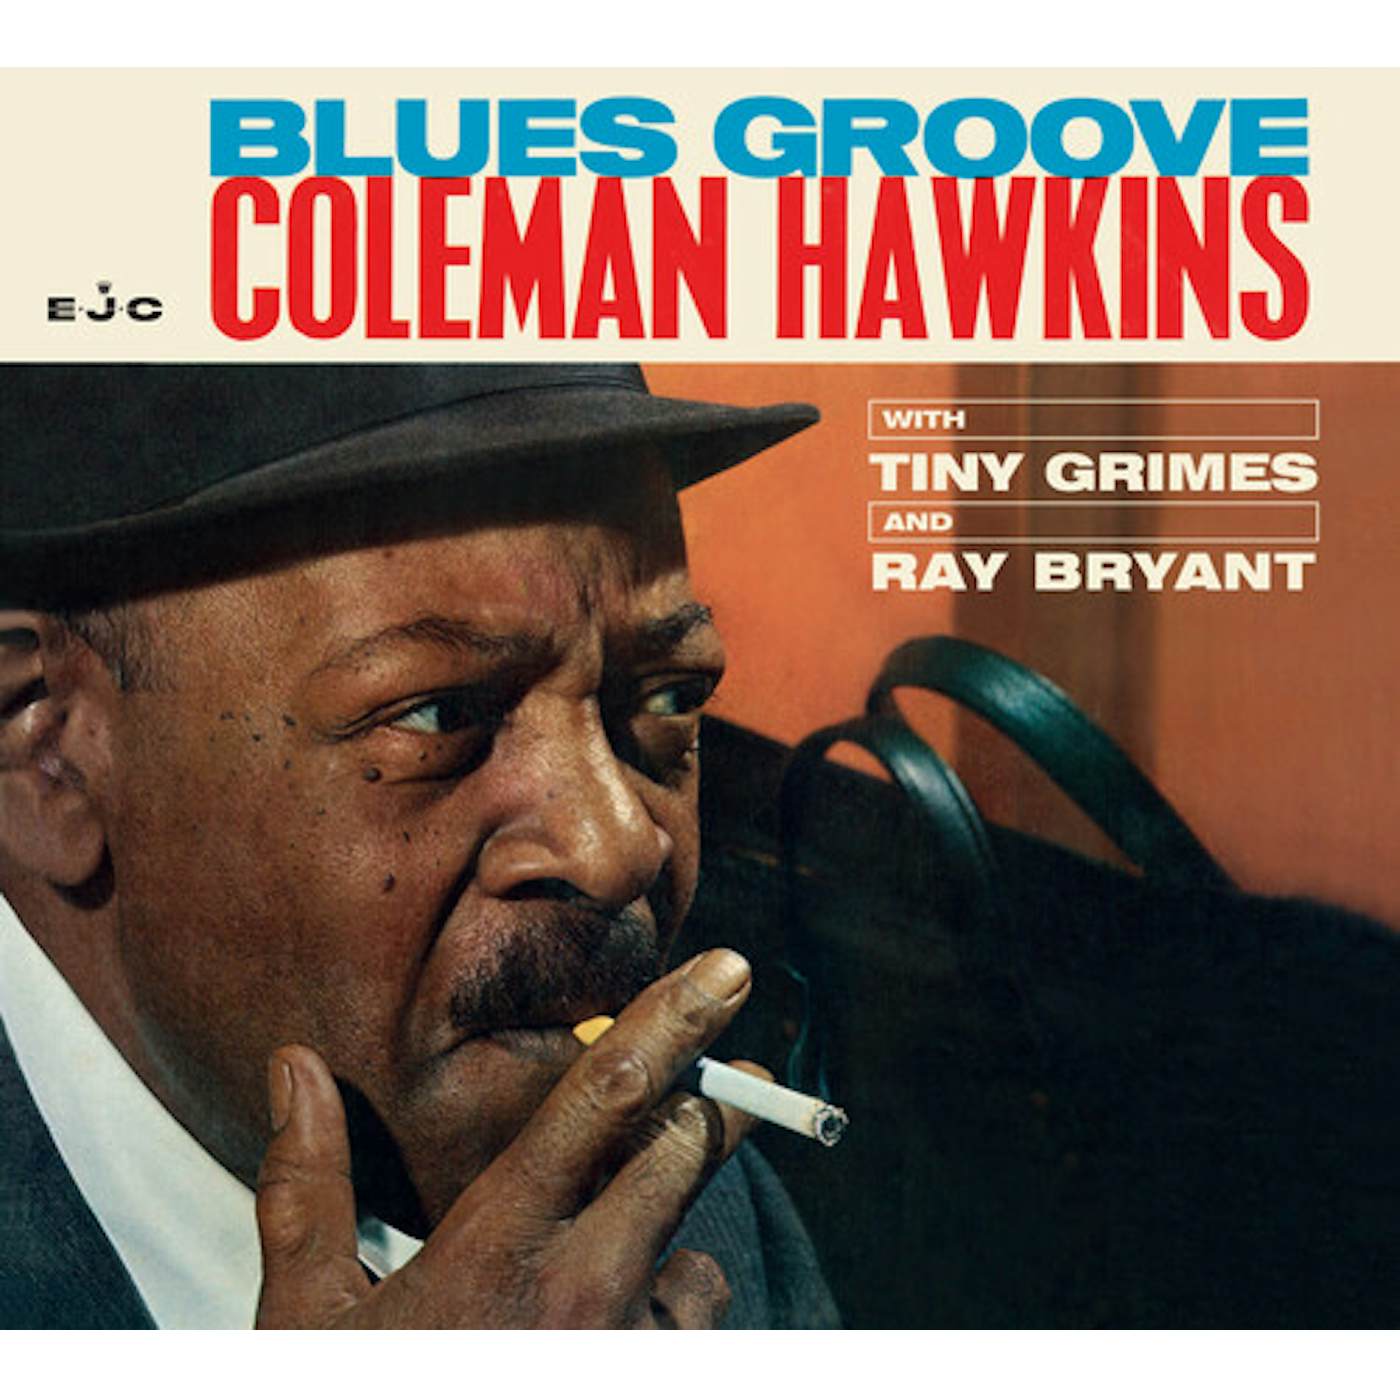 Coleman Hawkins BLUES GROOVE CD